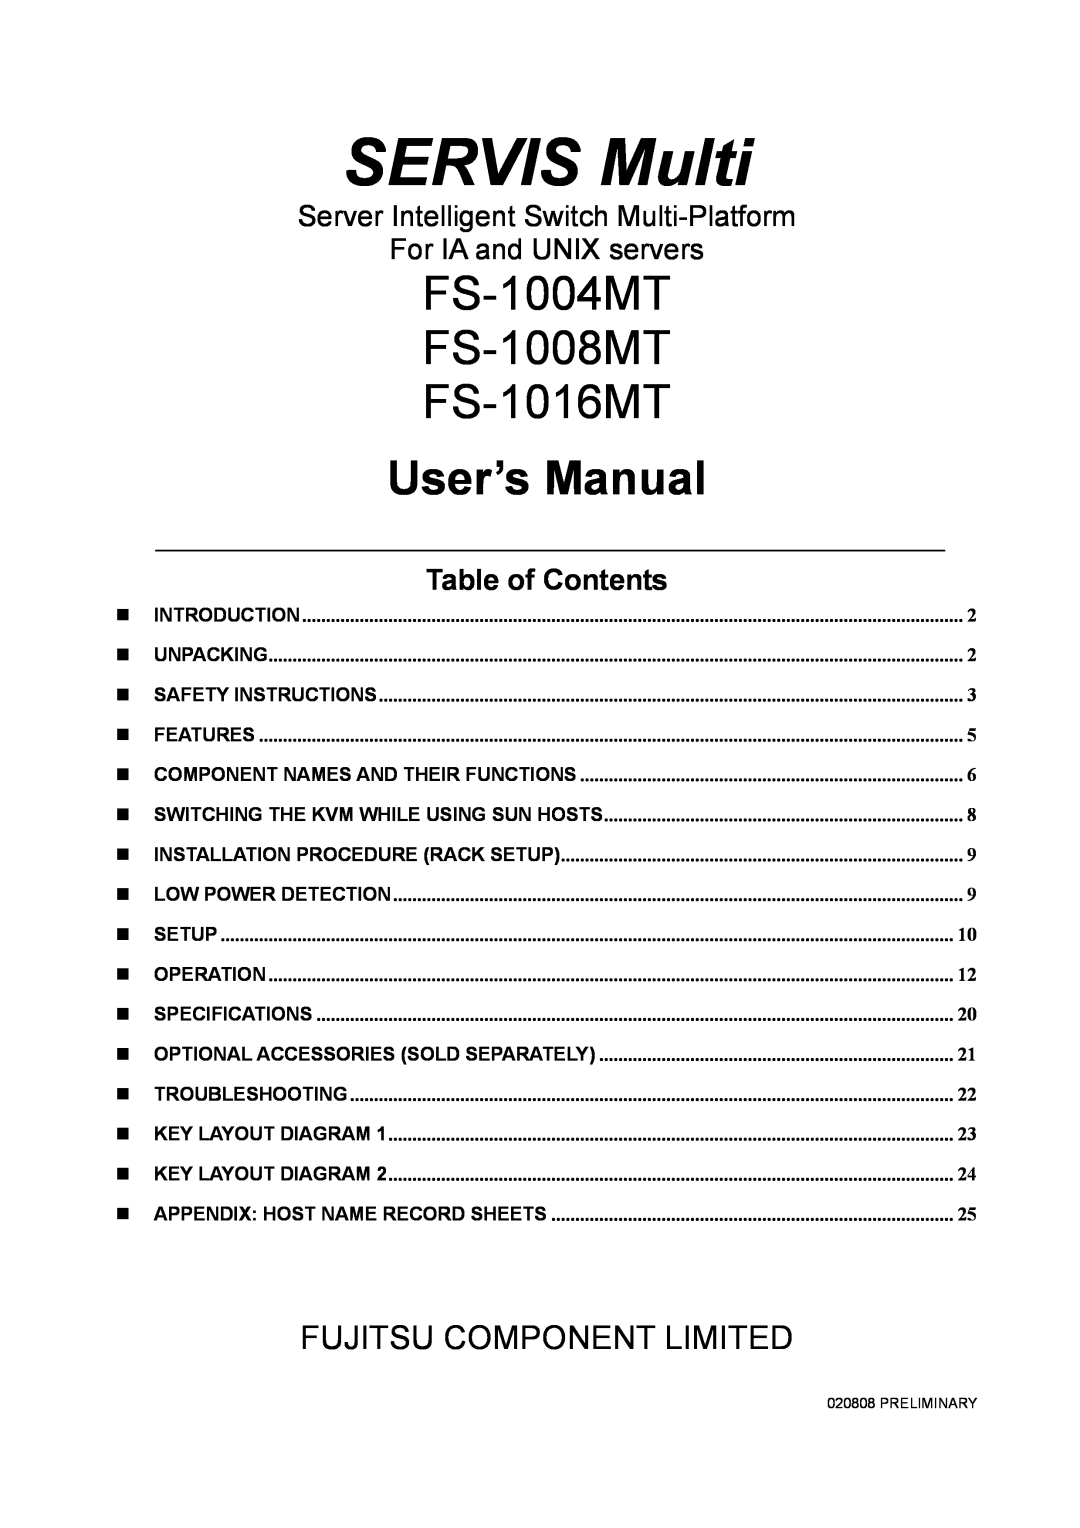 Fujitsu FS-1004MT, FX1008MT user manual SERVIS Multi, FS-1008MT, FS-1016MT, User’s Manual, Fujitsu Component Limited 